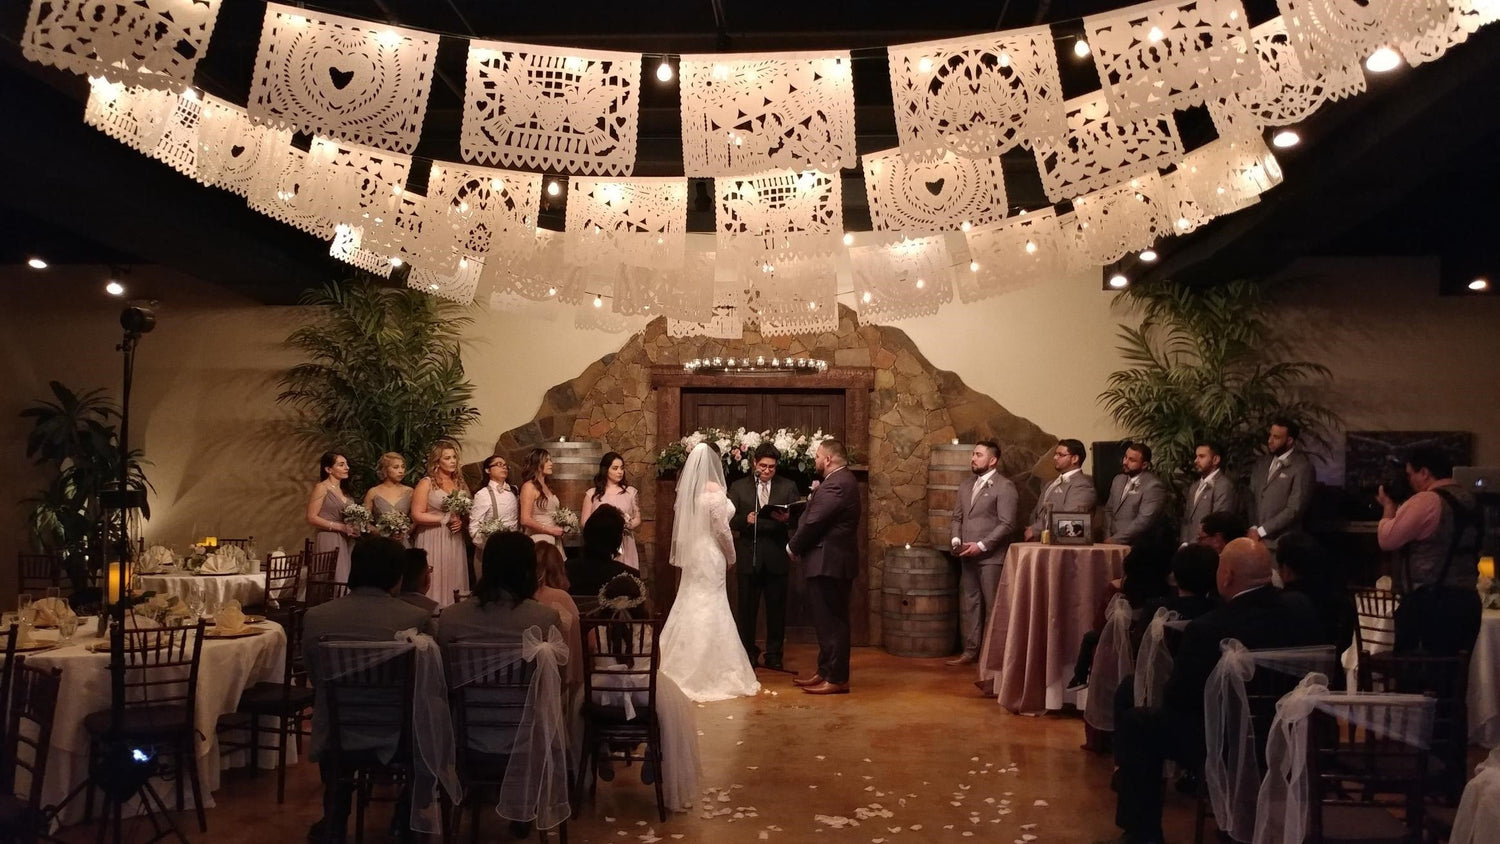 Papel Picado - Weddings, Bridal Showers, Anniversaries